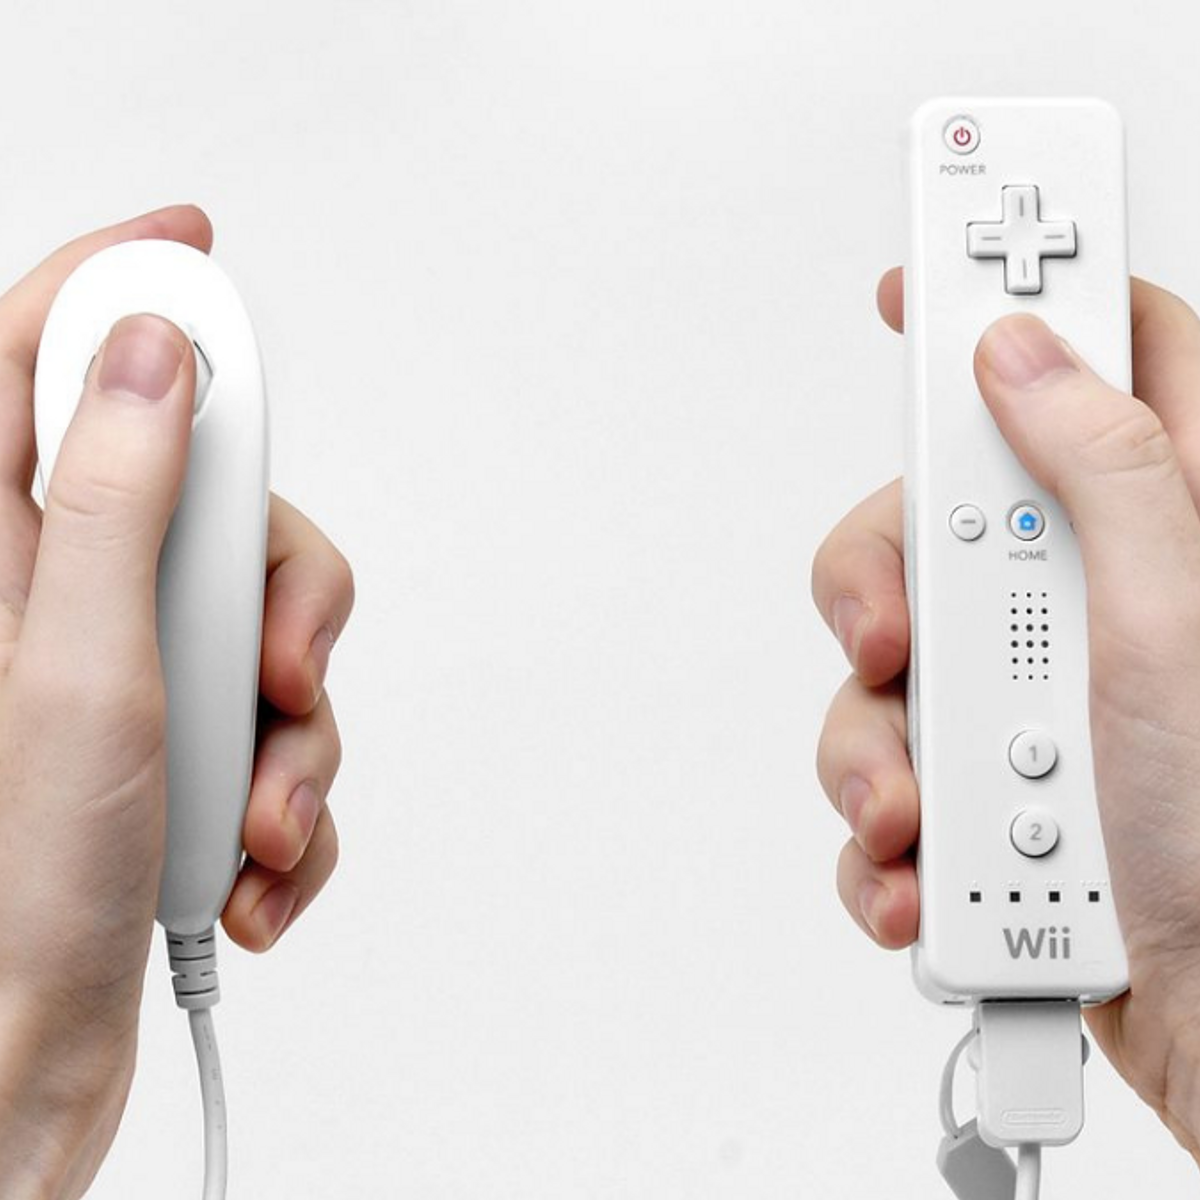 Will the Nintendo Wii Self-Destruct in 2023?